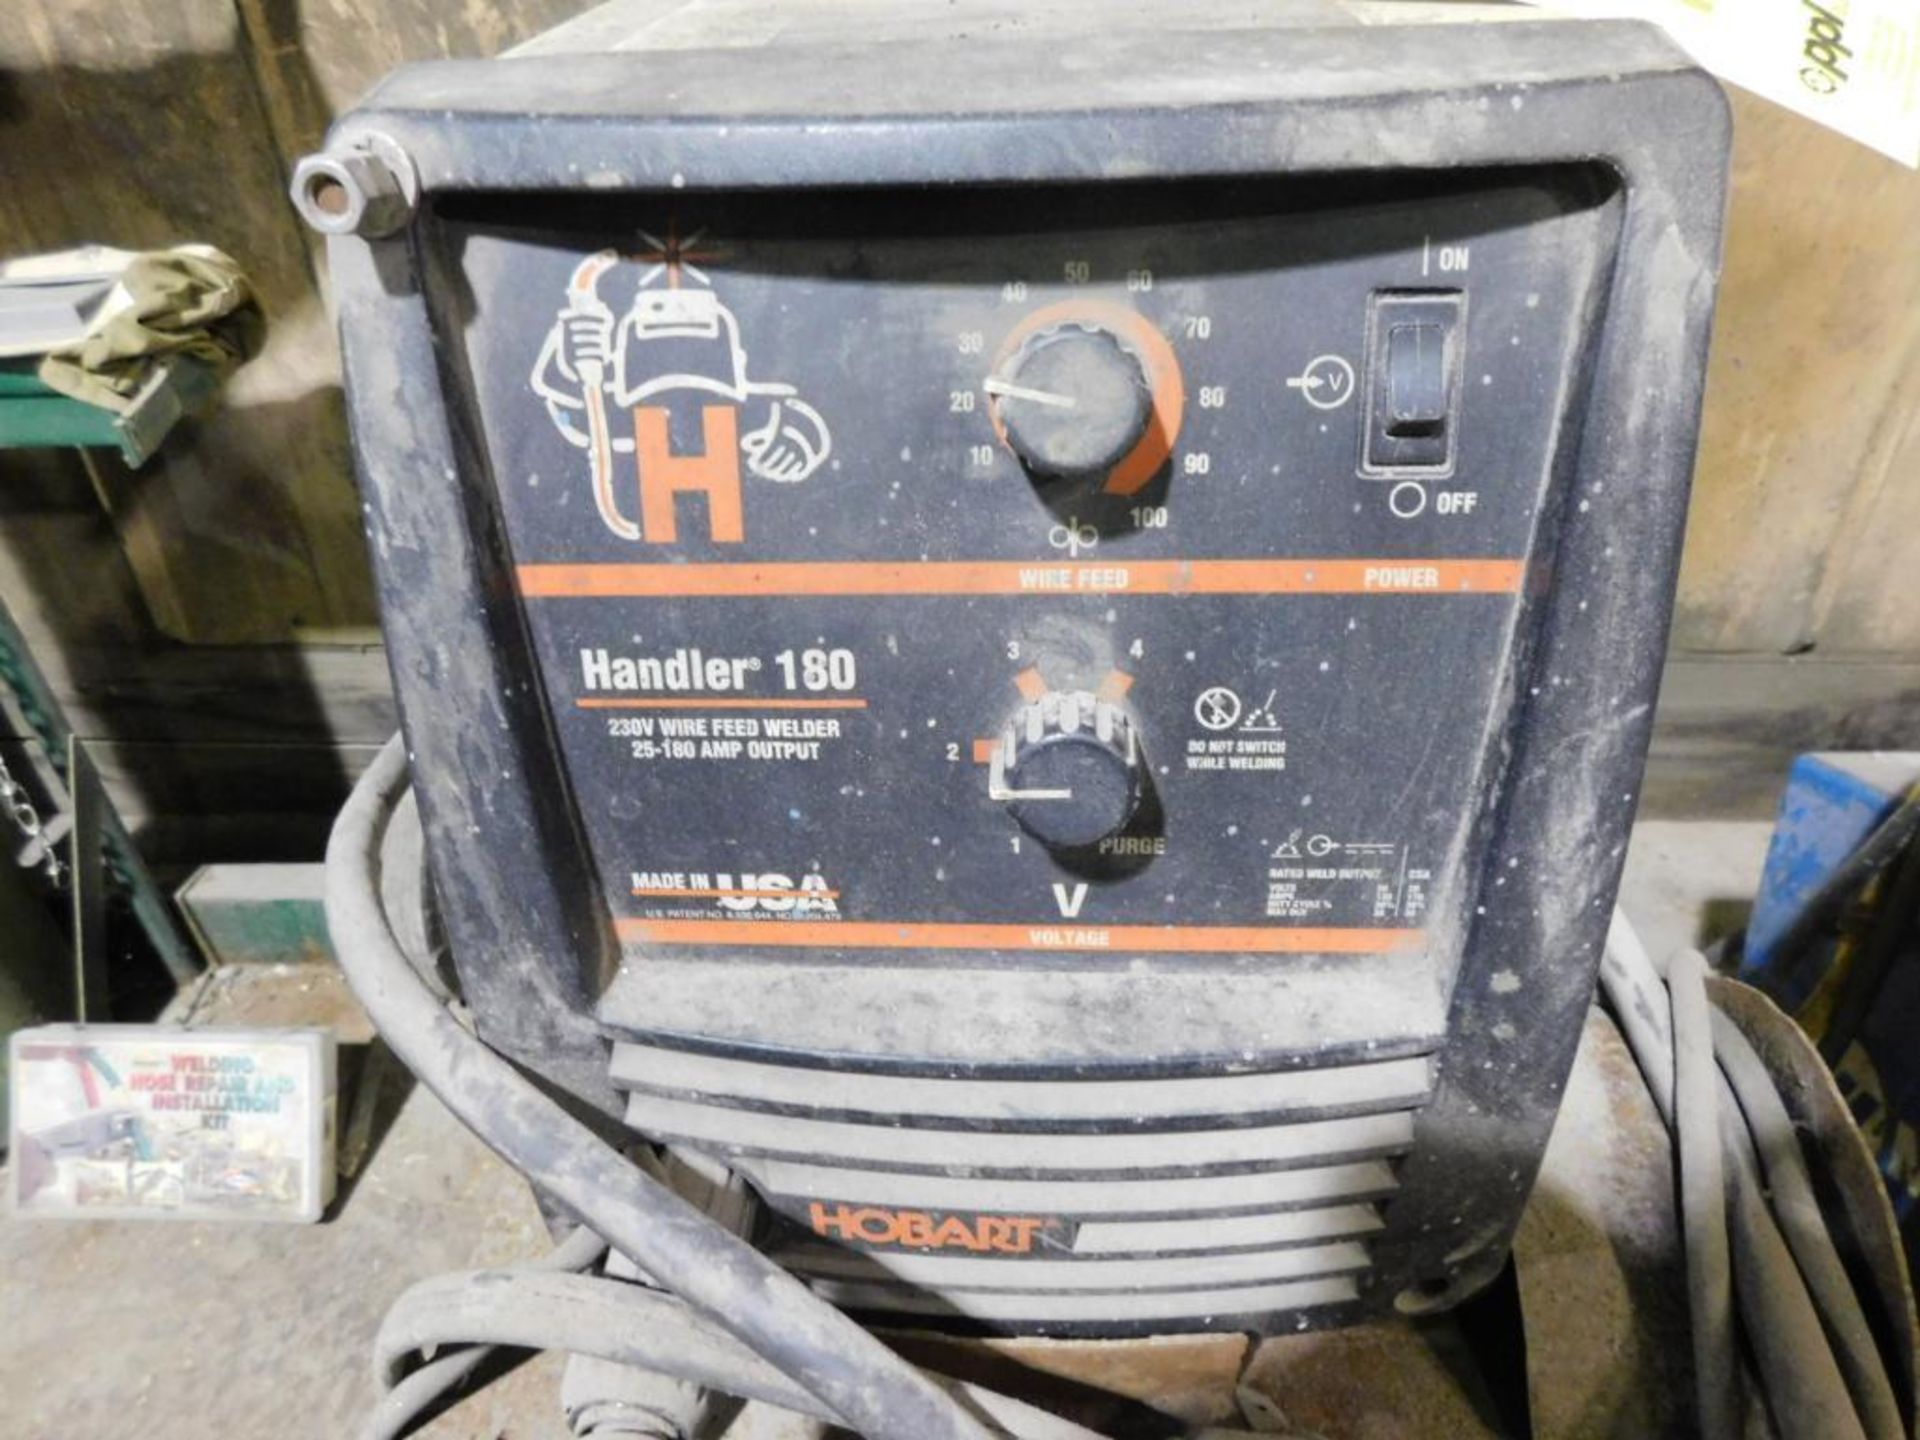 Hobart Handler 180 Portable Mig Welder - Image 2 of 3